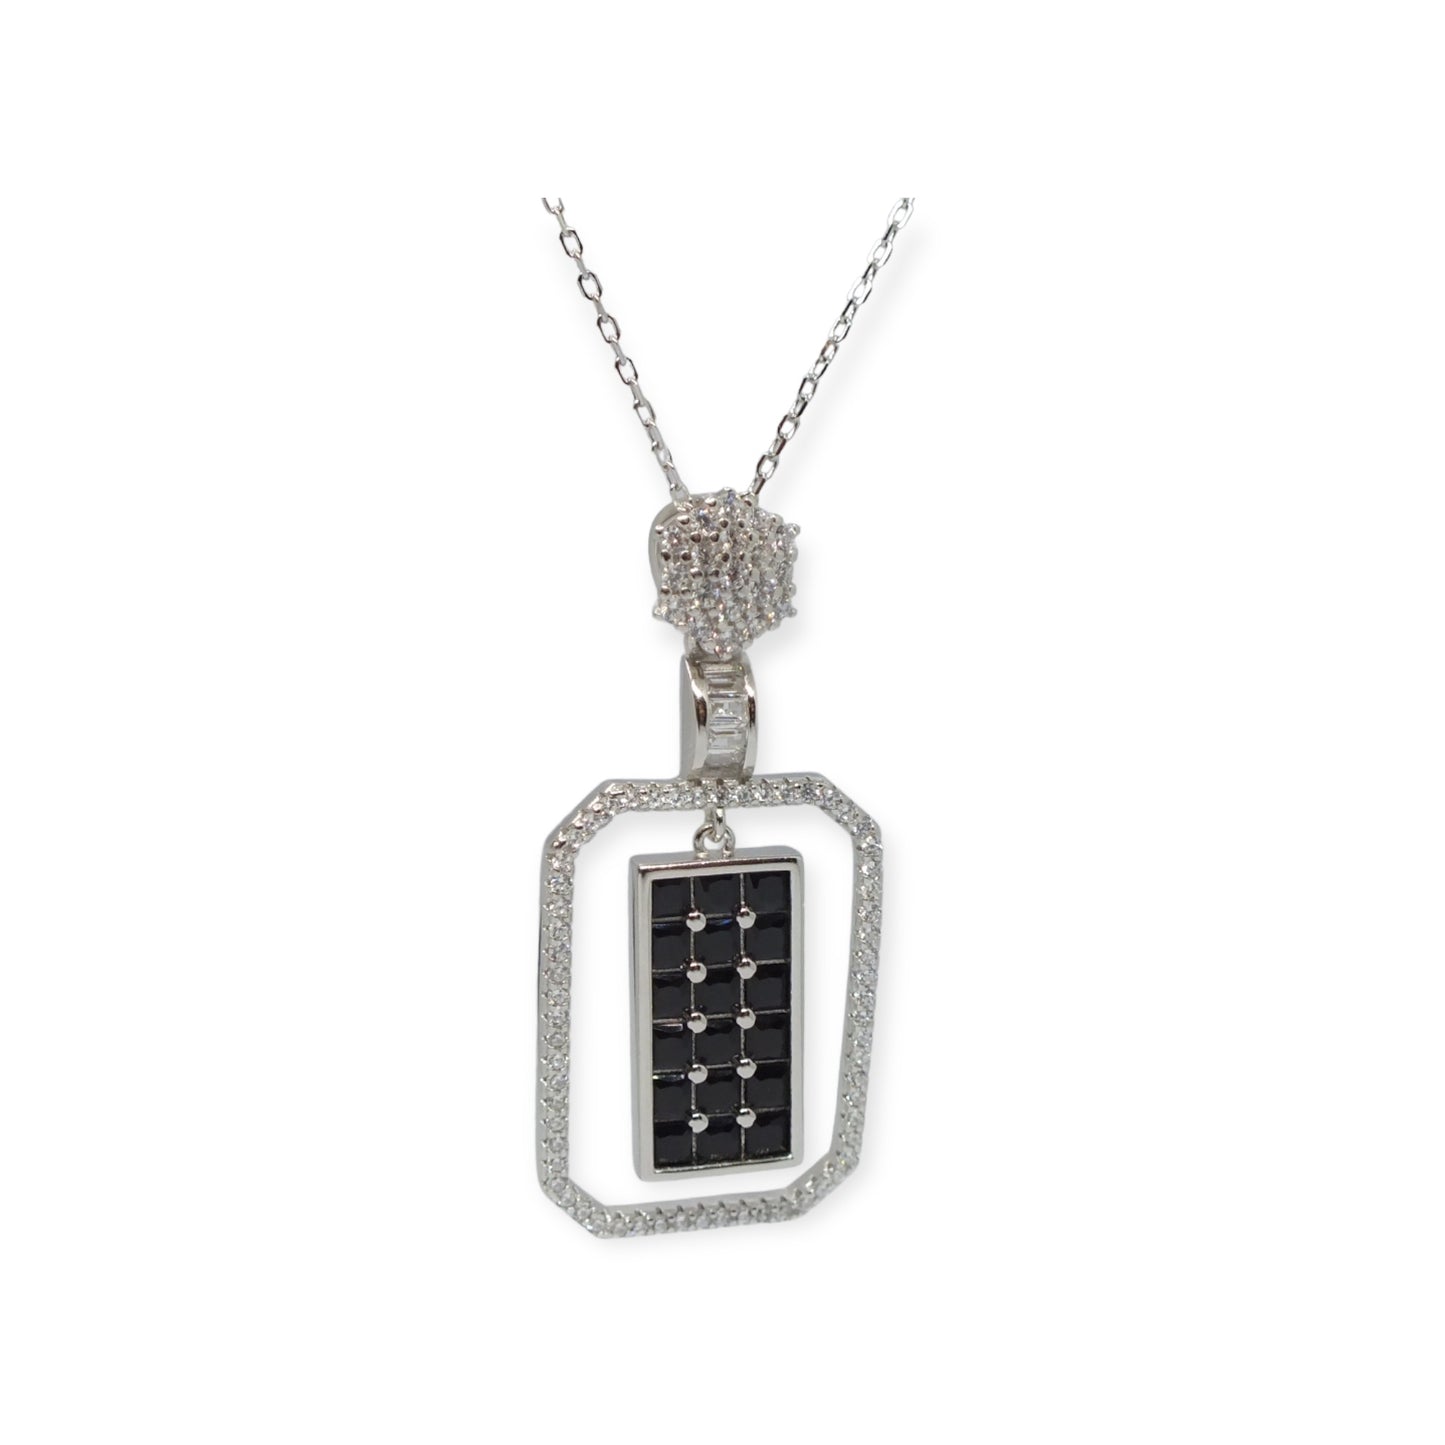 Silver Necklace With Black Stones -سلسال فضة مع احجار سوداء